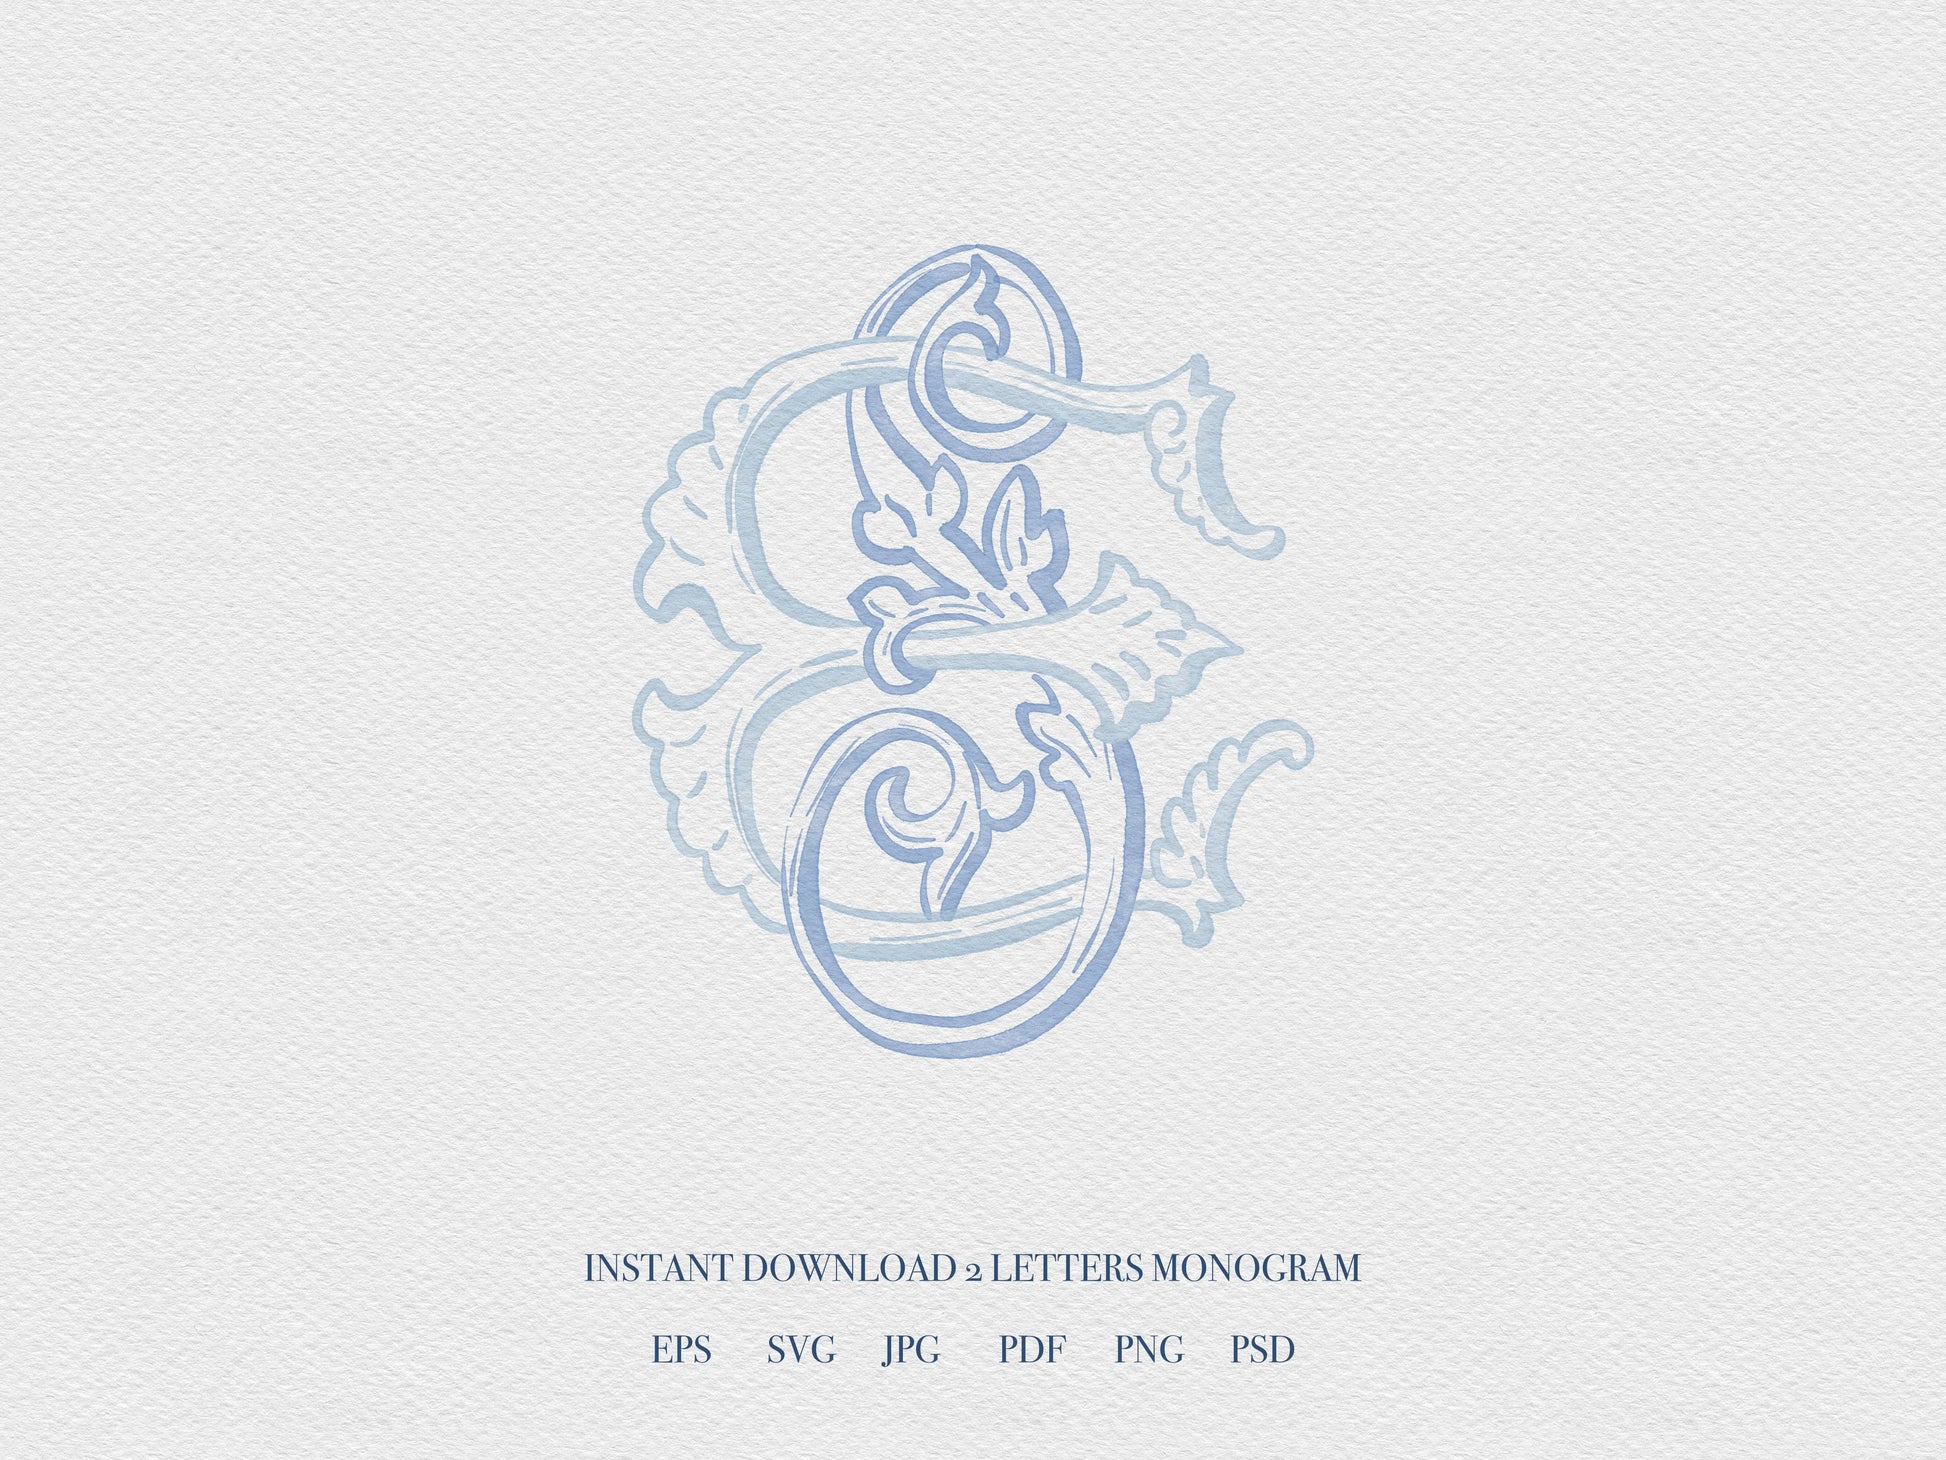 2 Letter Monogram with Letters SE| Digital Download - Wedding Monogram SVG, Personal Logo, Wedding Logo for Wedding Invitations The Wedding Crest Lab